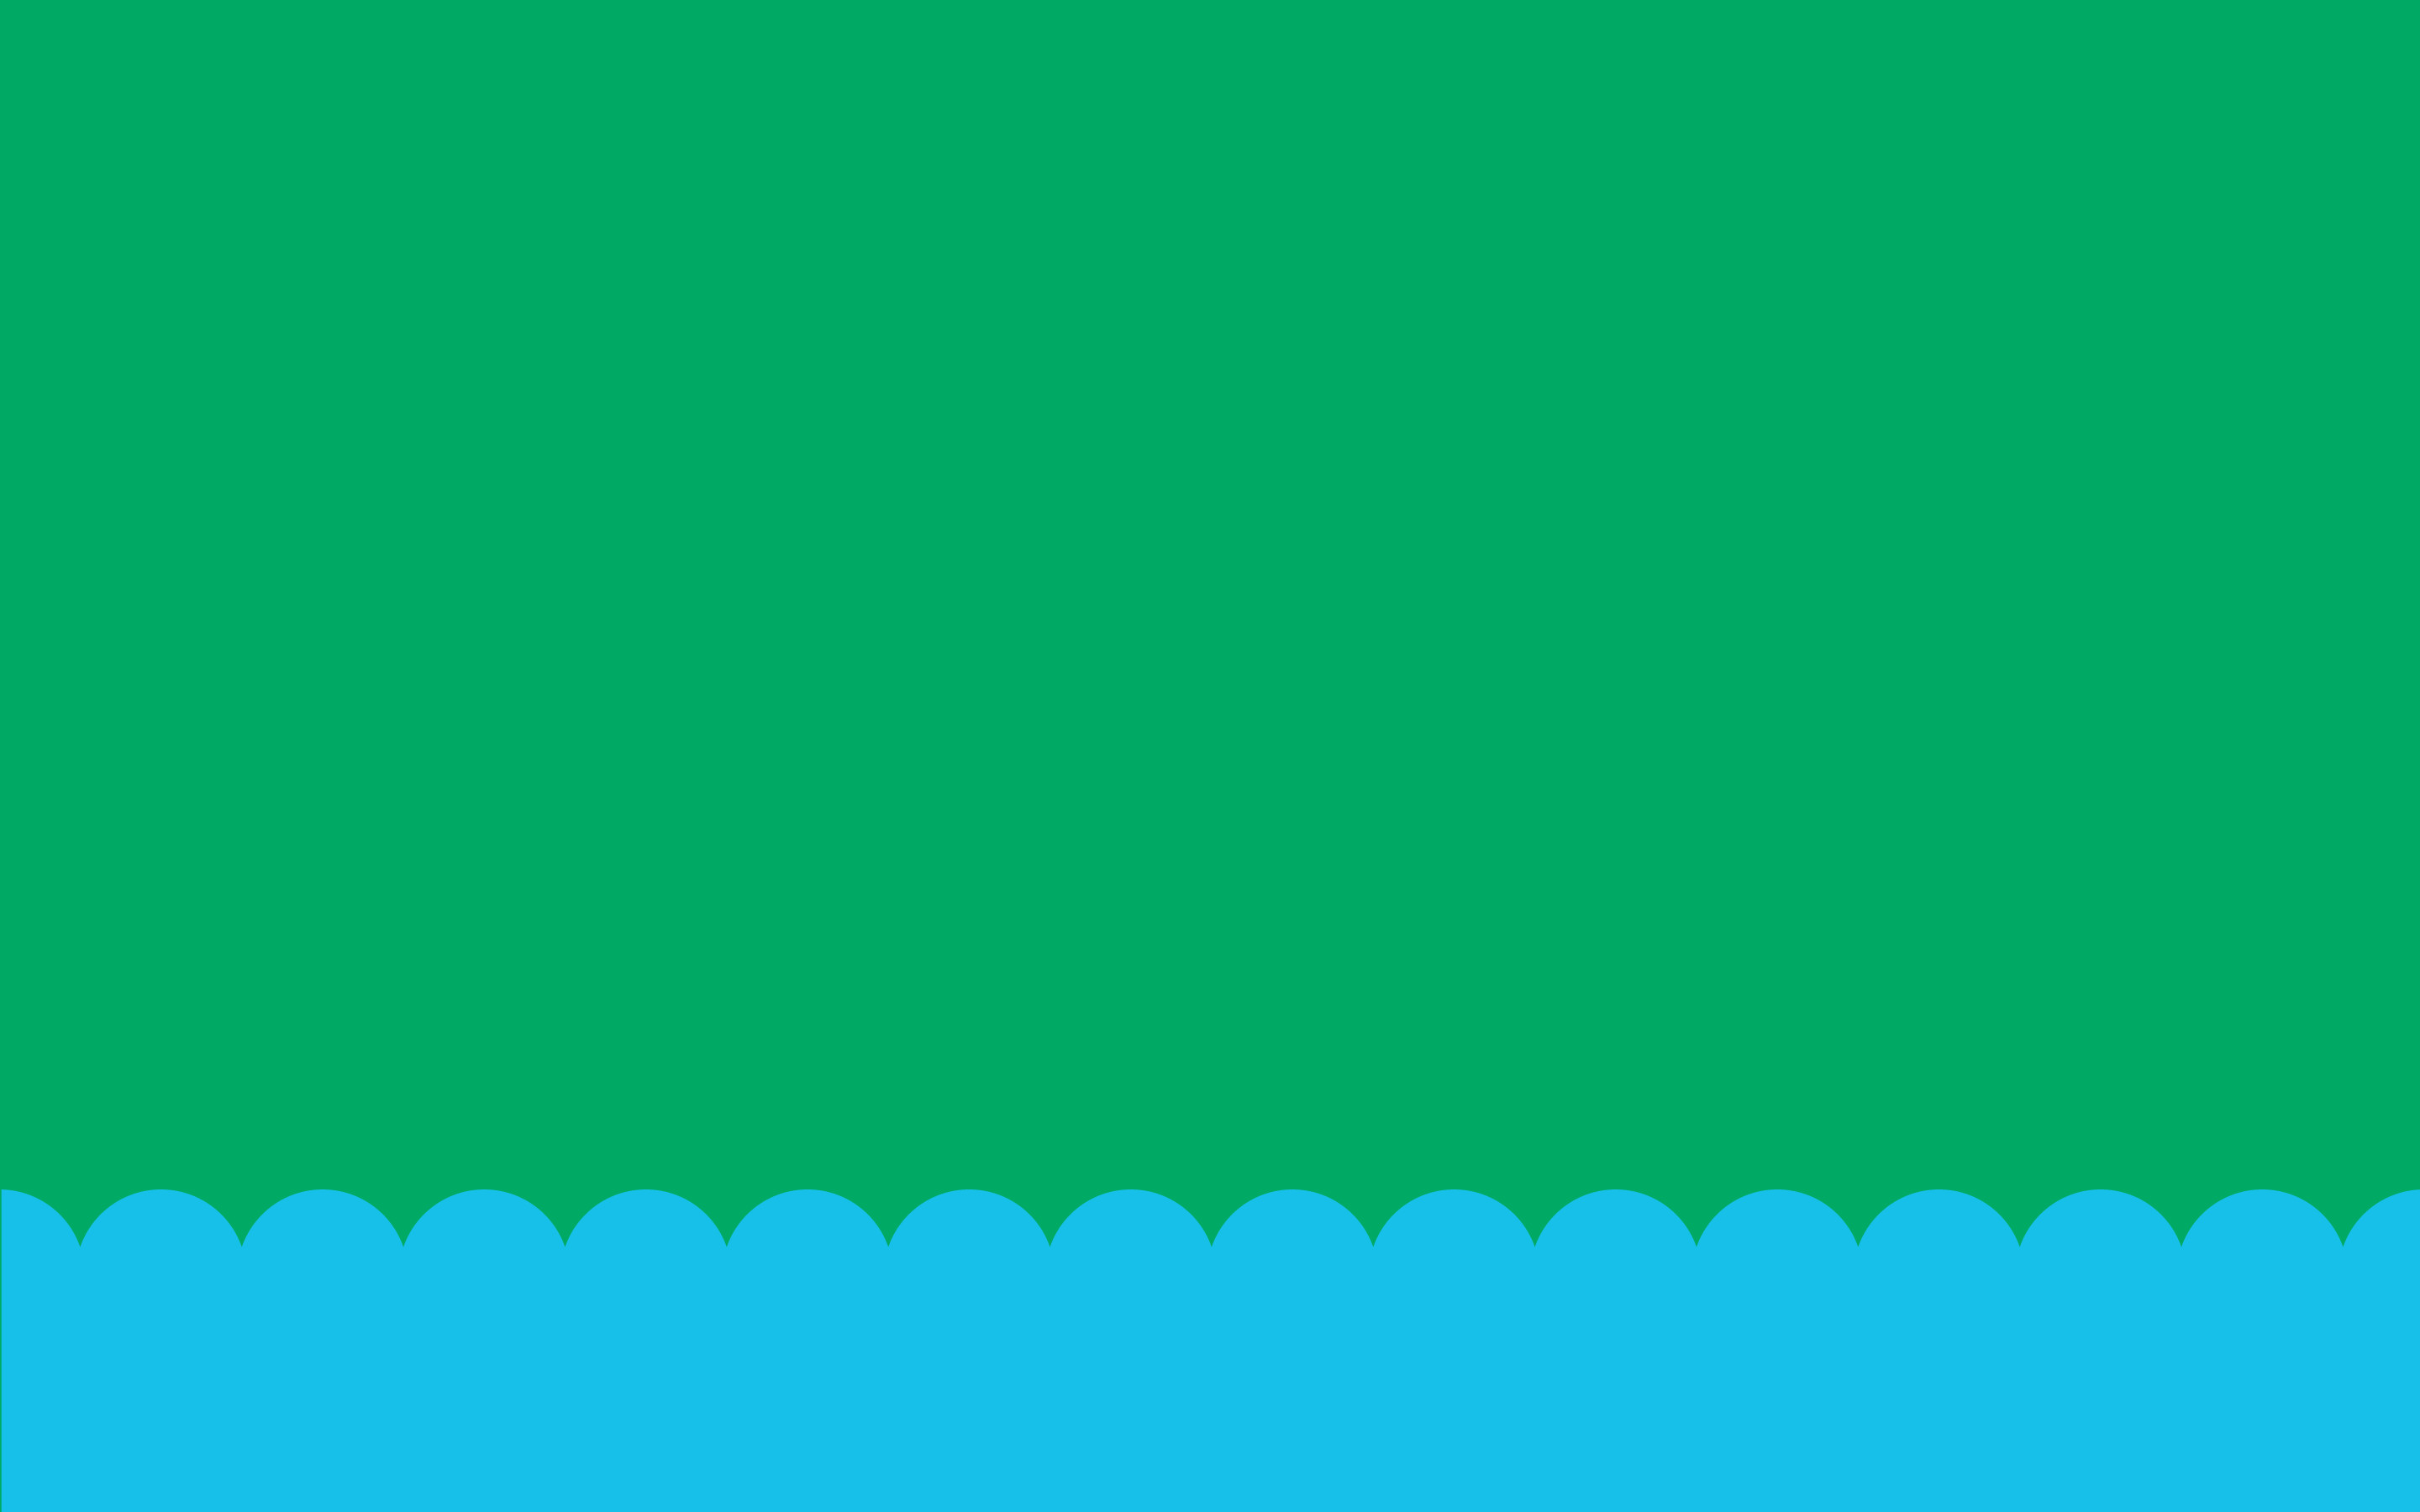 Green scallop wallpaper 2,8801,800 pixels Foods to serve Pinterest Wallpaper and Mermaid